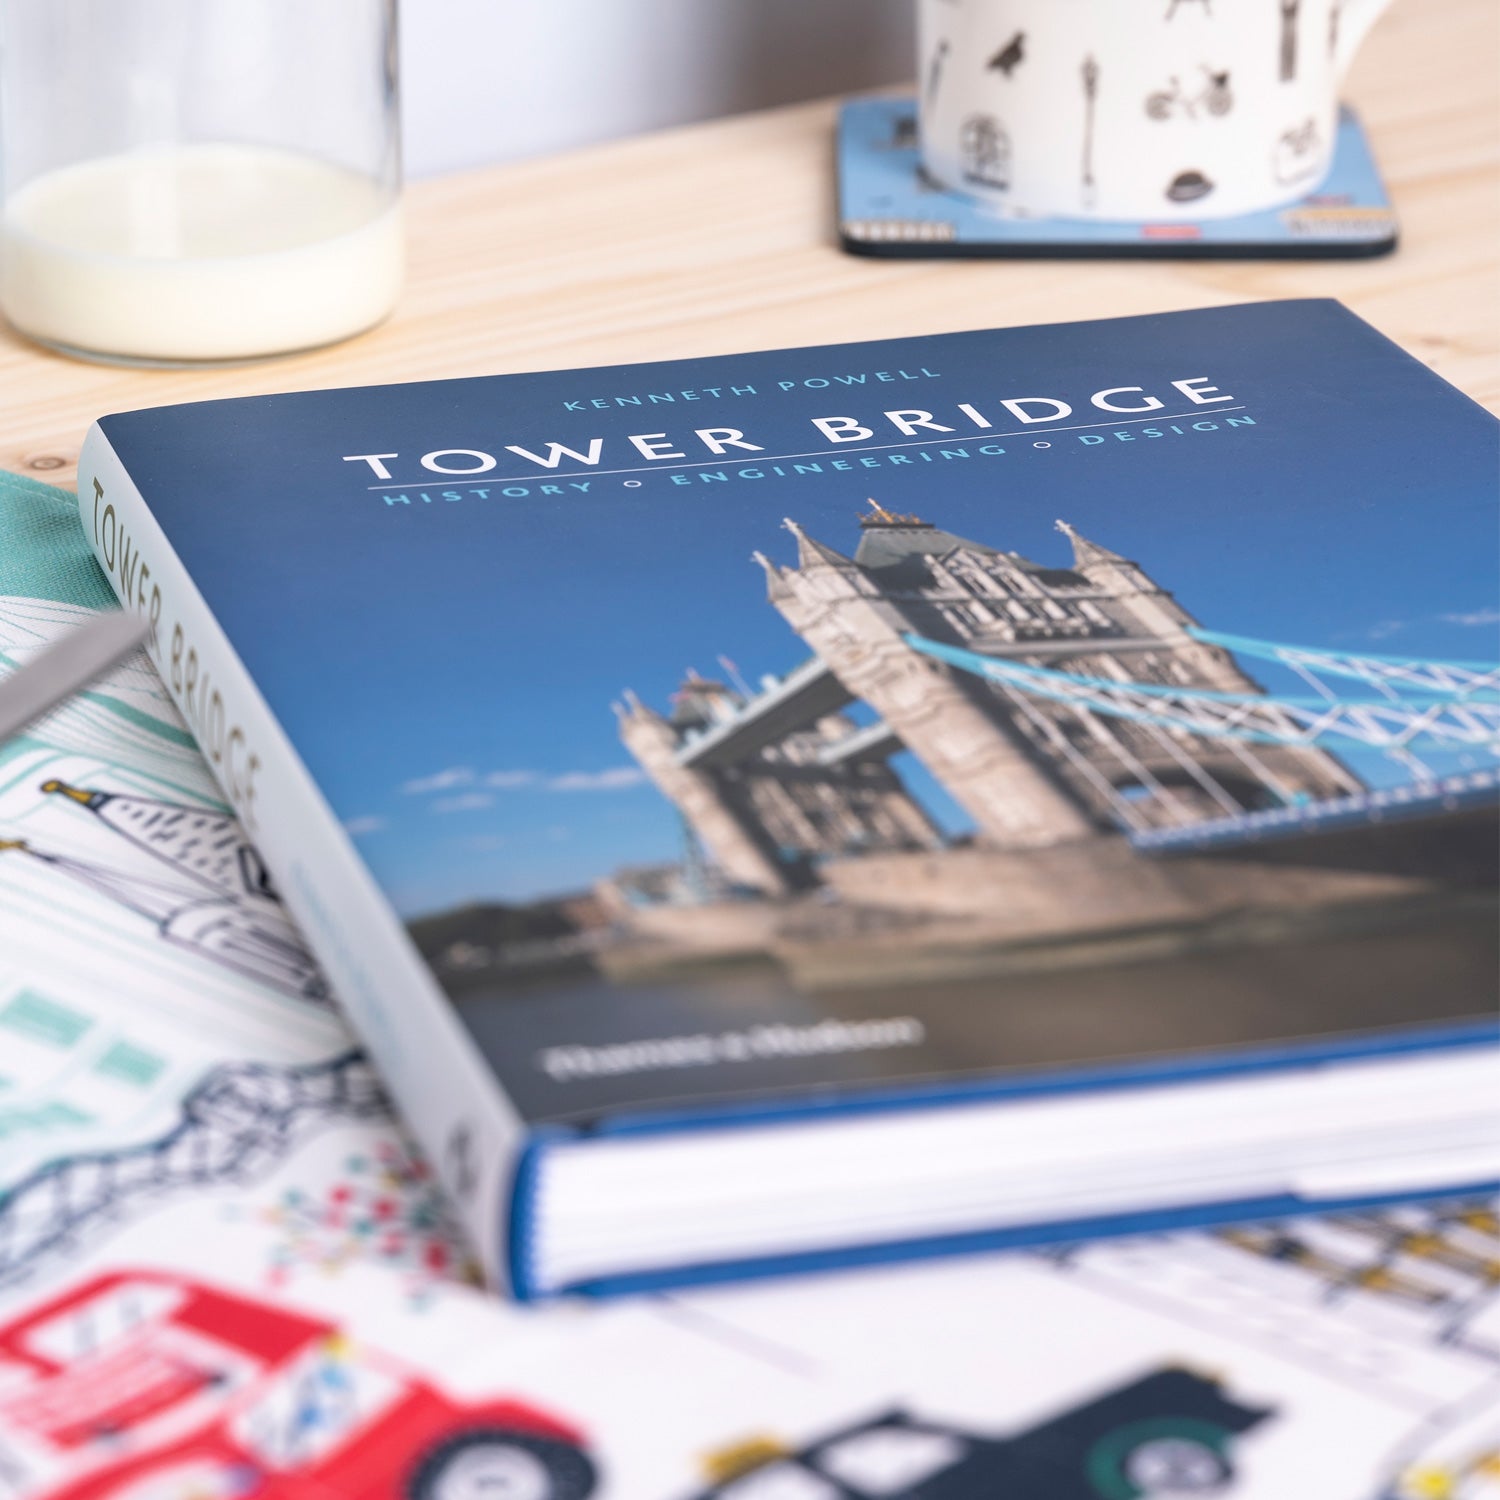 Books from Tower Bridge